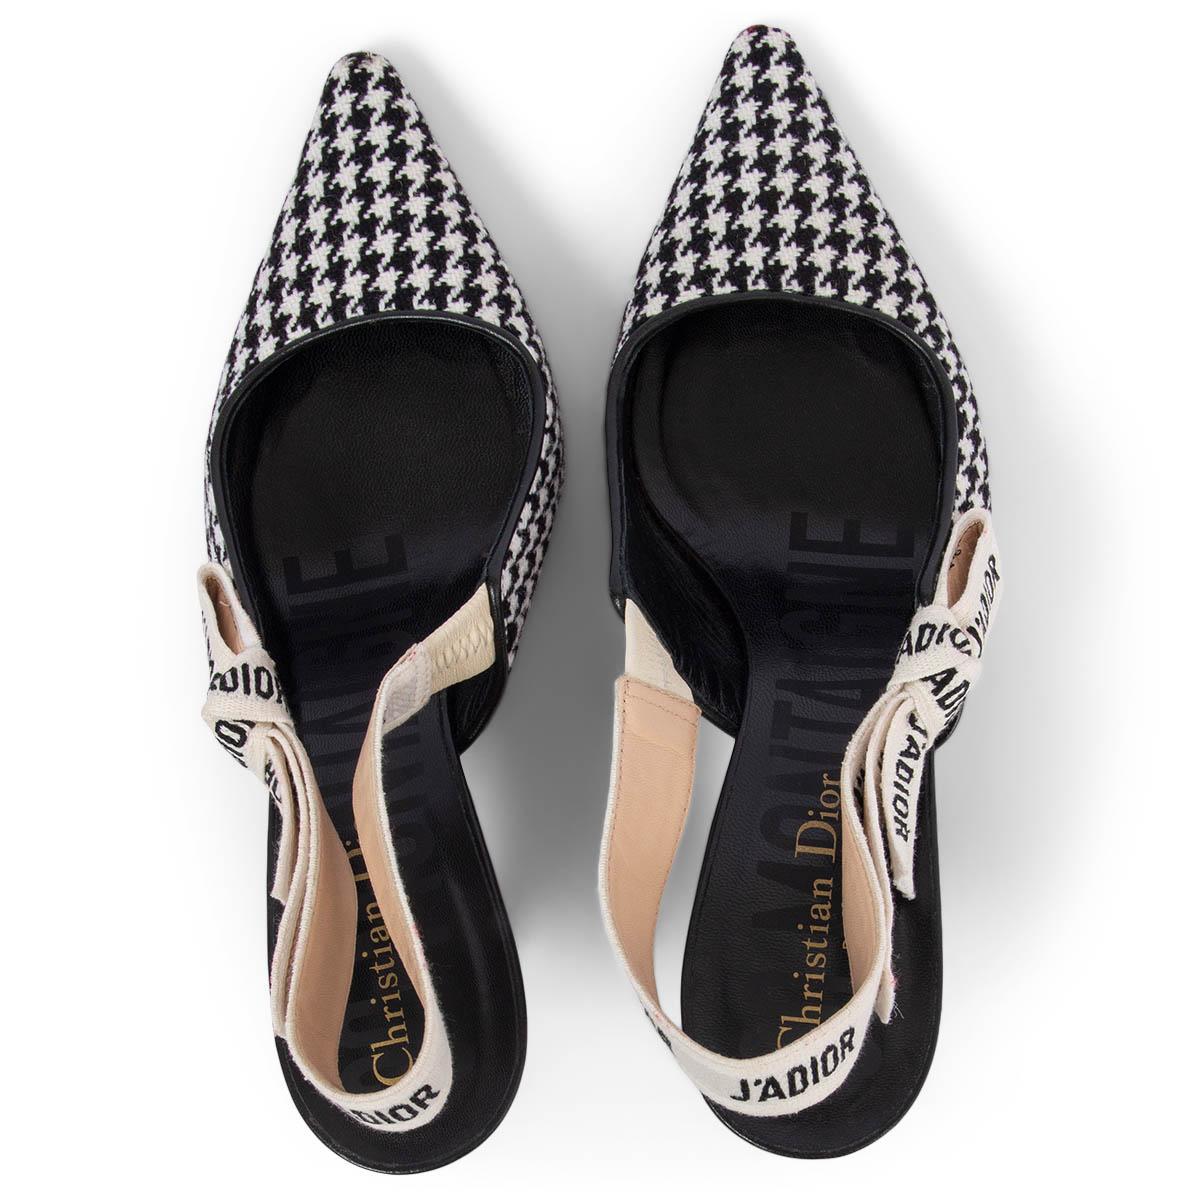 CHRISTIAN DIOR black & white HOUNDSOOTH J'ADIOR POINTED TOE Slingbacks Shoes 37 For Sale 1